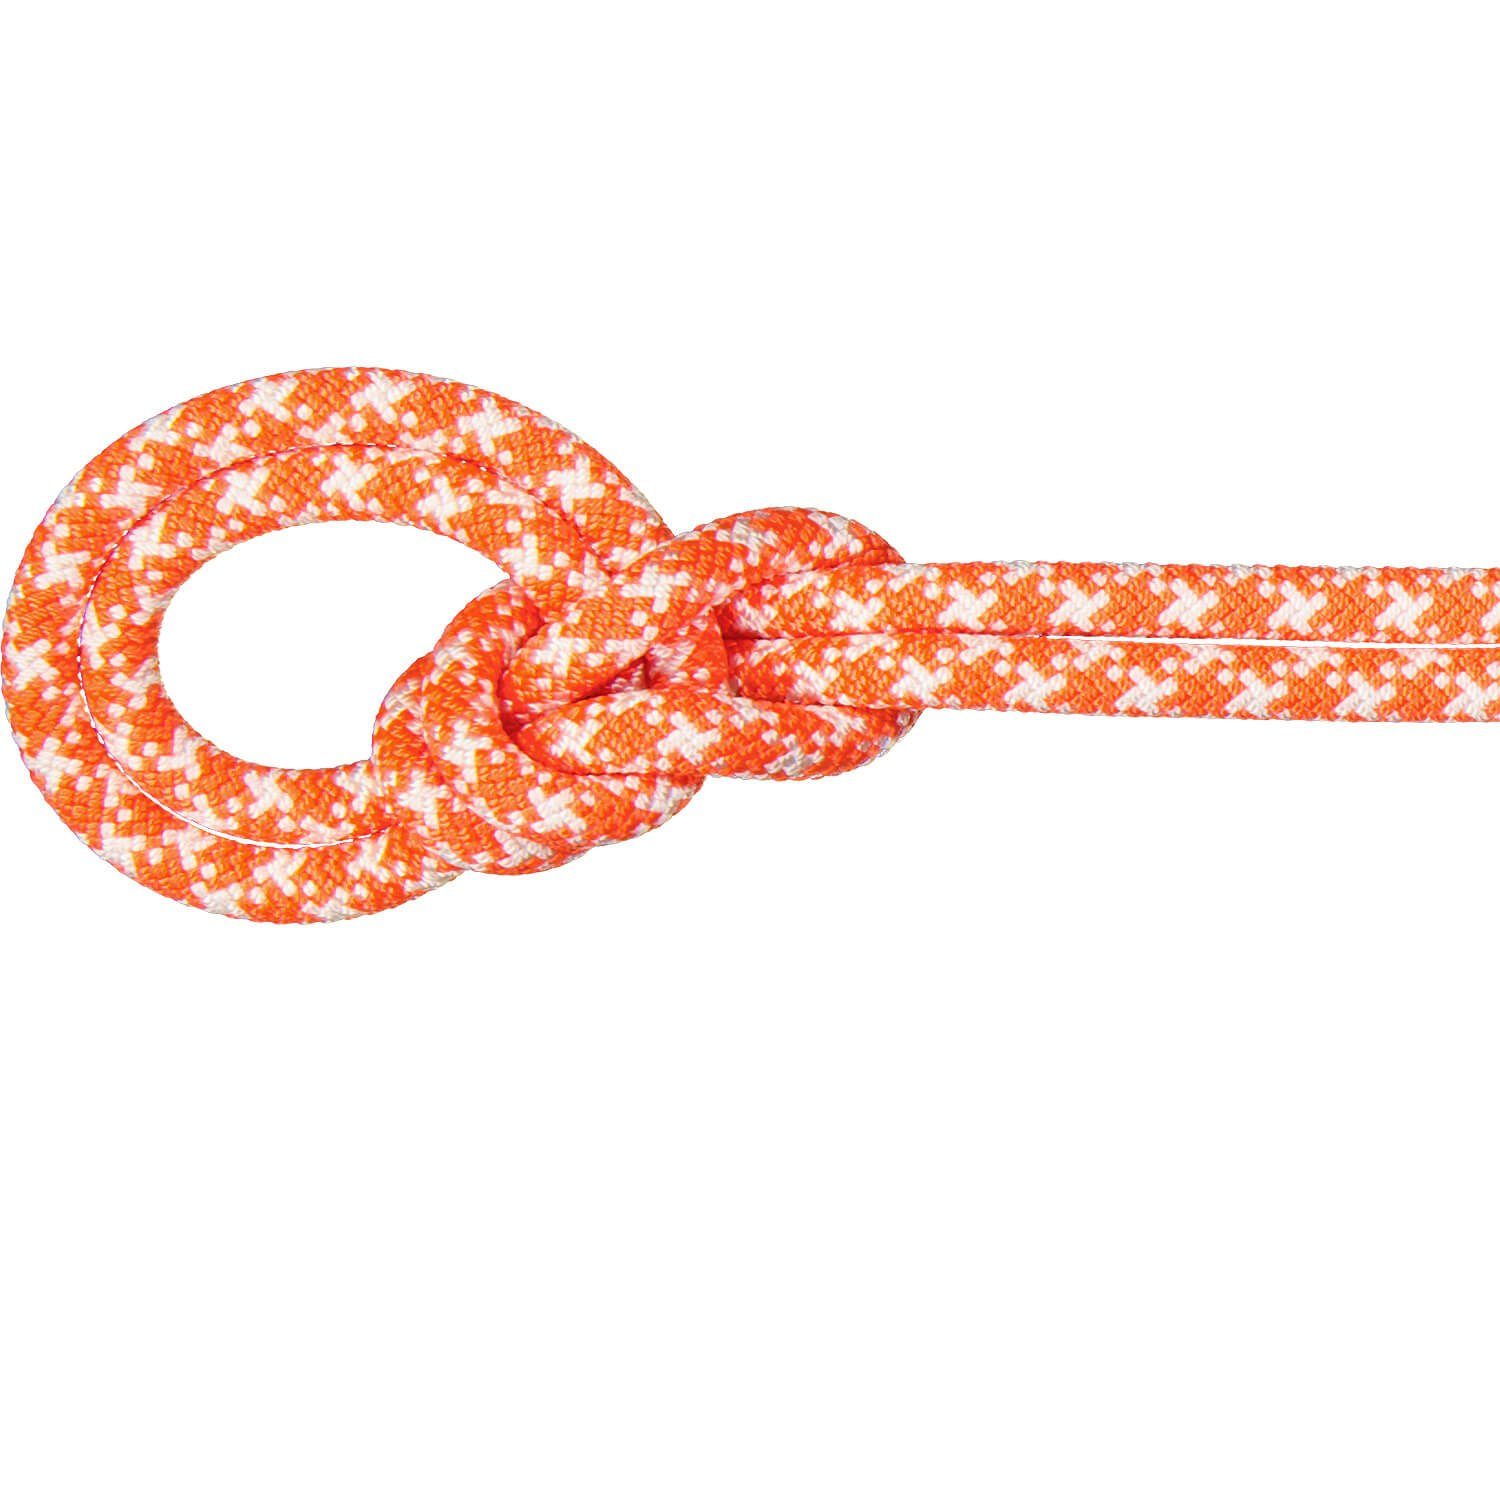 Orange Seil Kletterseil 9.5 Crag Classic Mammut Rope